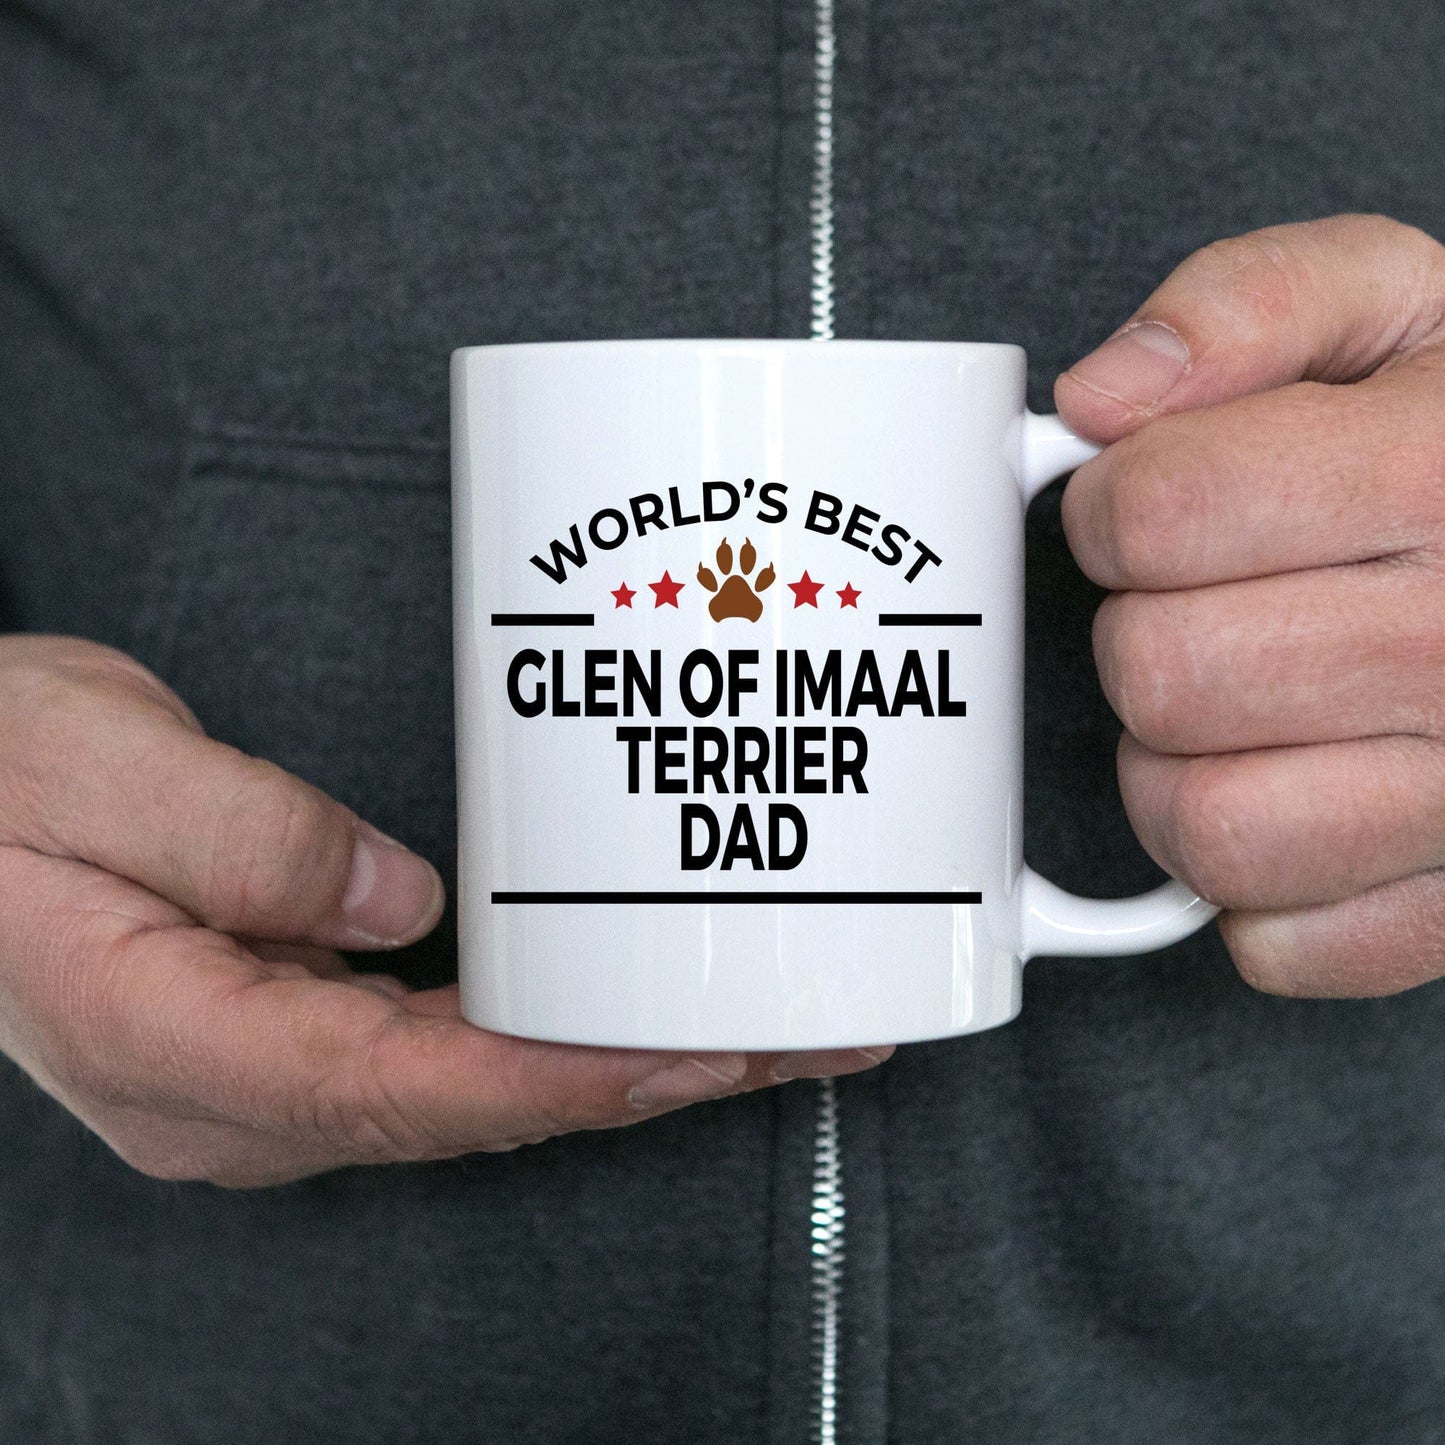 Glen of Imaal Terrier Dog Lover Gift World's Best Dad Birthday Father's Day White Ceramic Coffee Mug